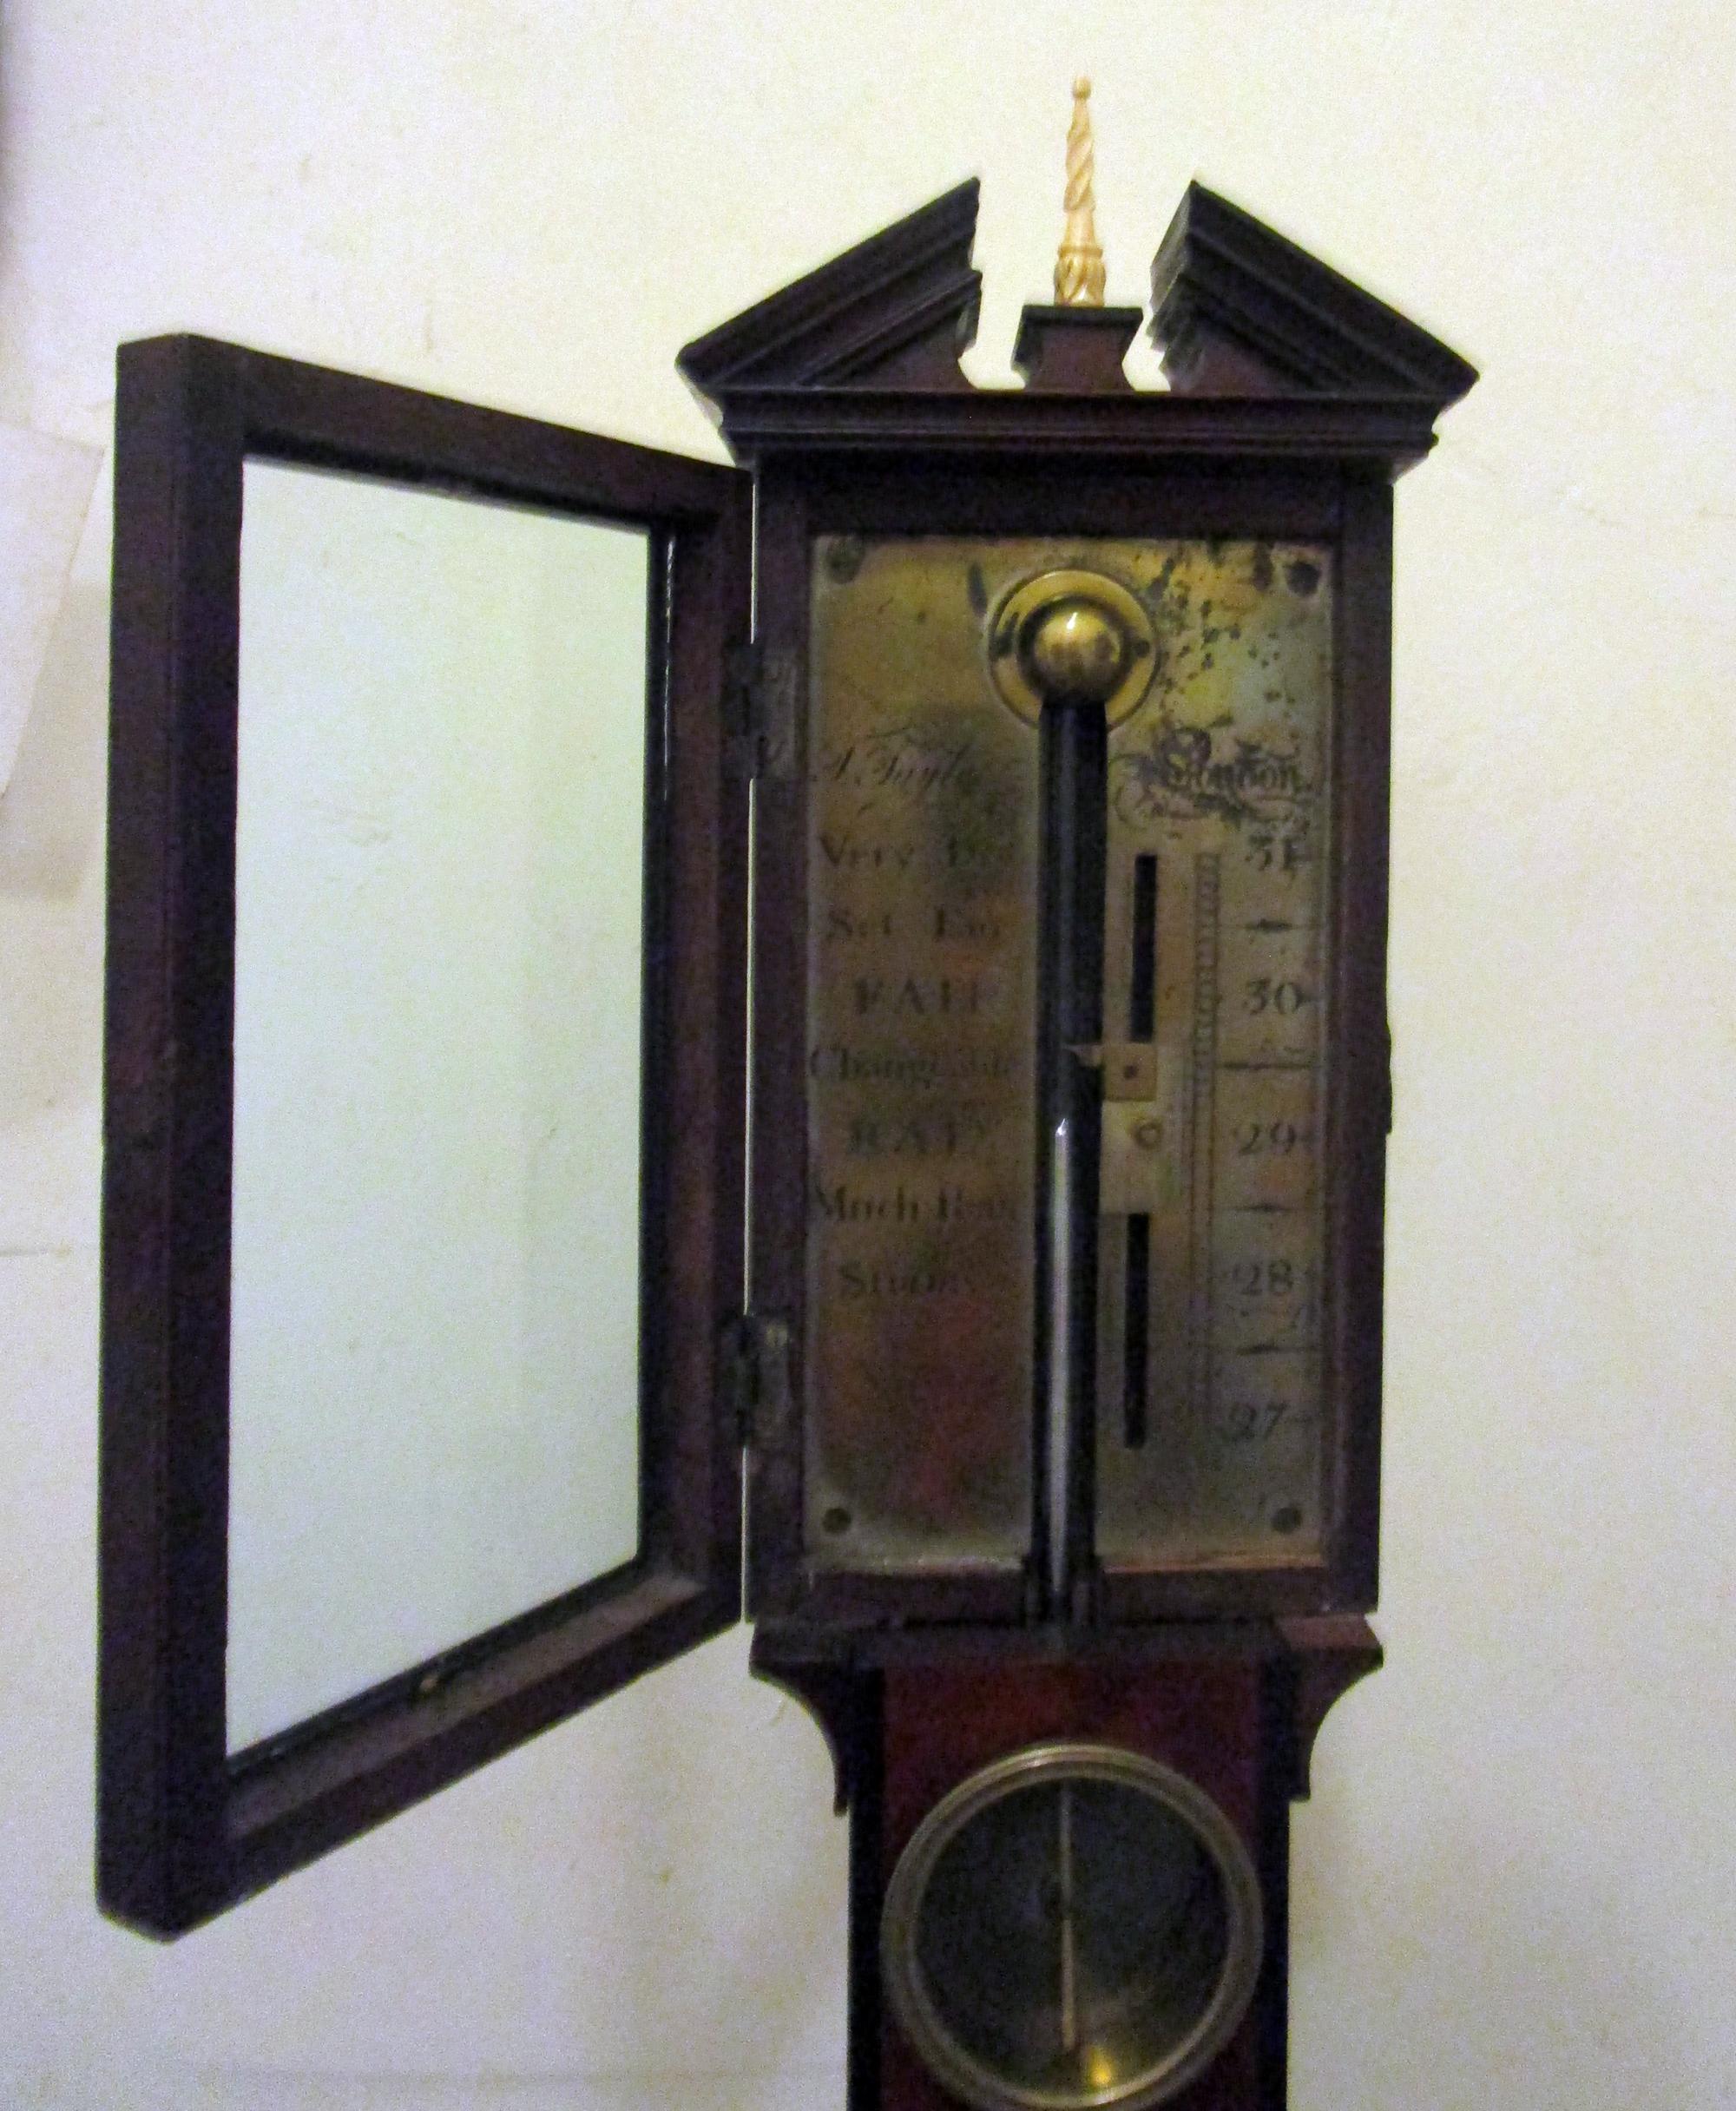 taylor instrument company barometer